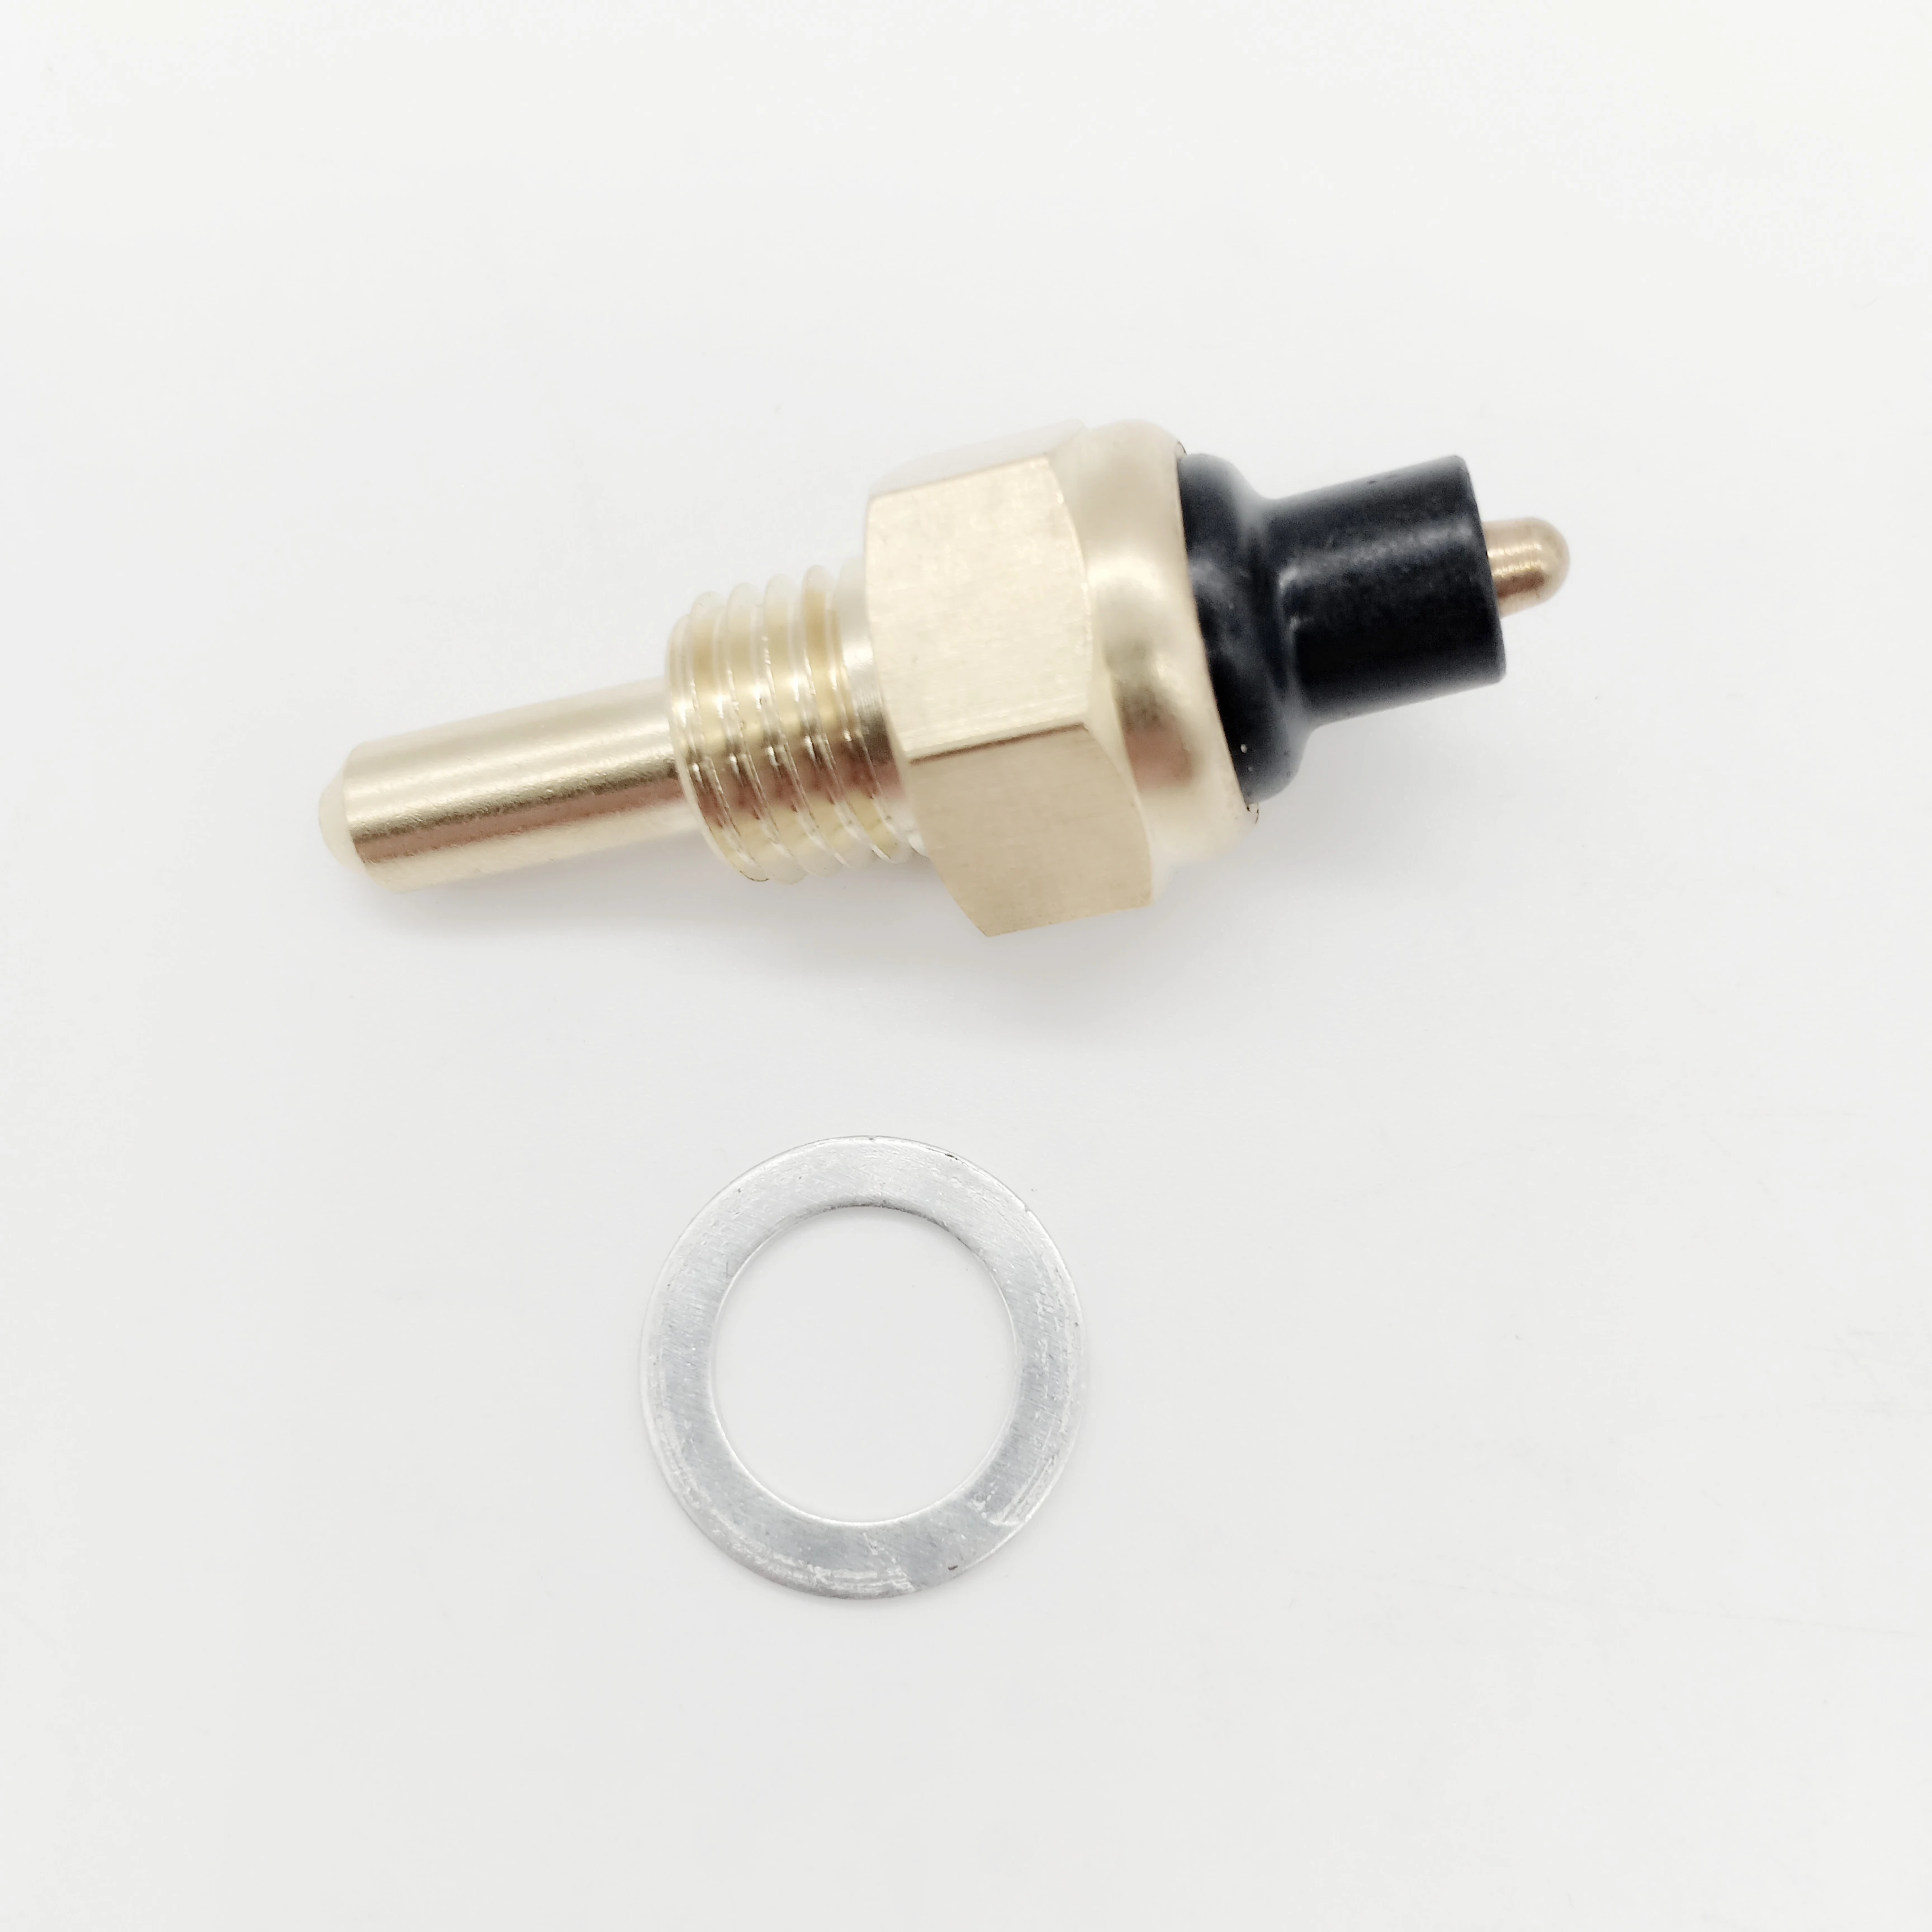 Oil engineTemperature Test Sensor for Honda 37750-Hc4-751 37750-Hn5-M41 37750-Hm5-630